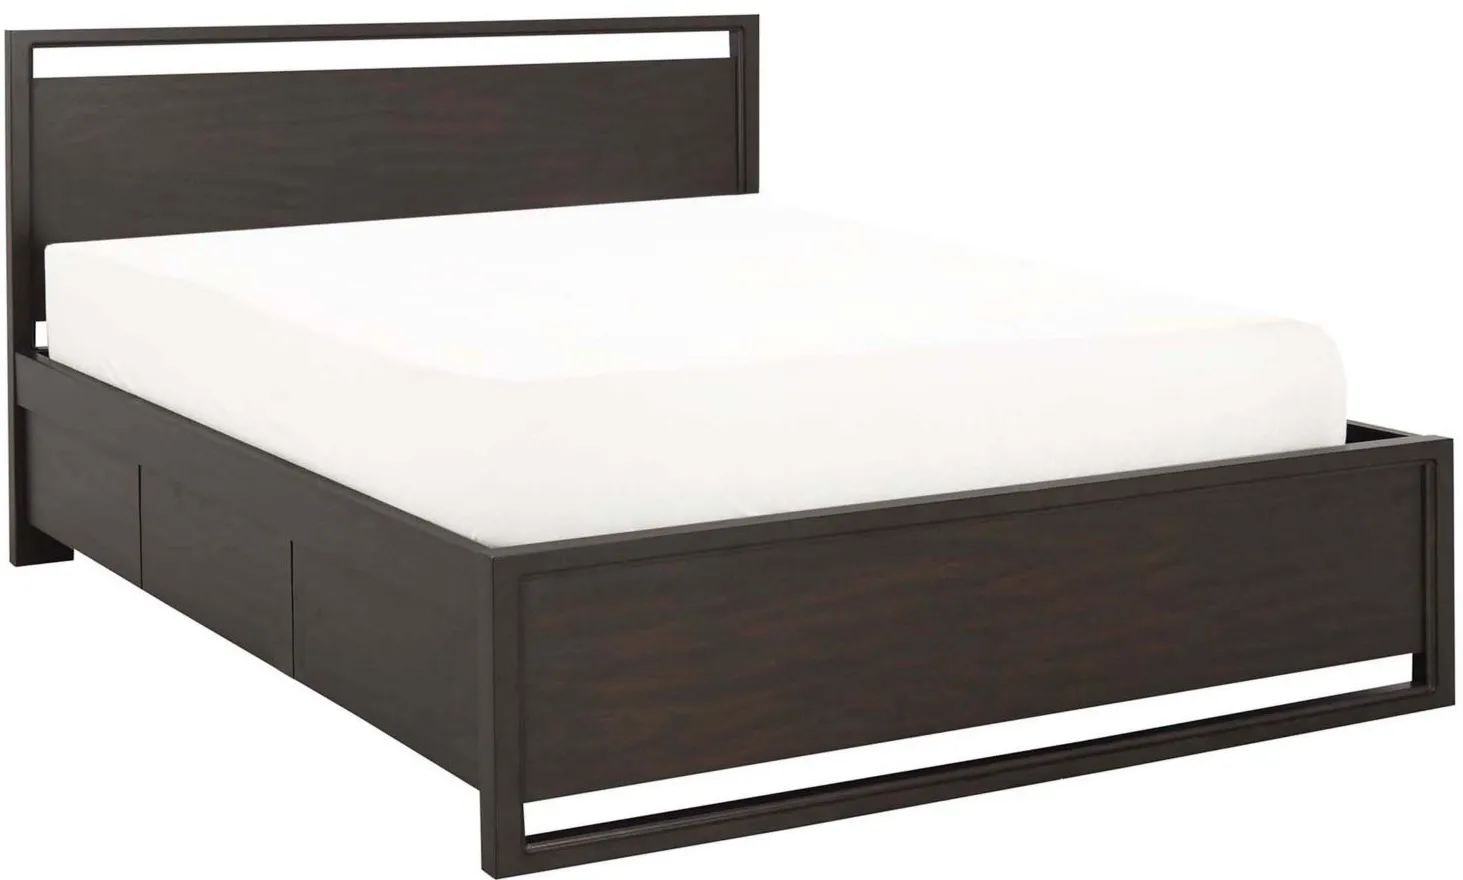 Aversa 1-side Storage Bed in Brown by Bellanest